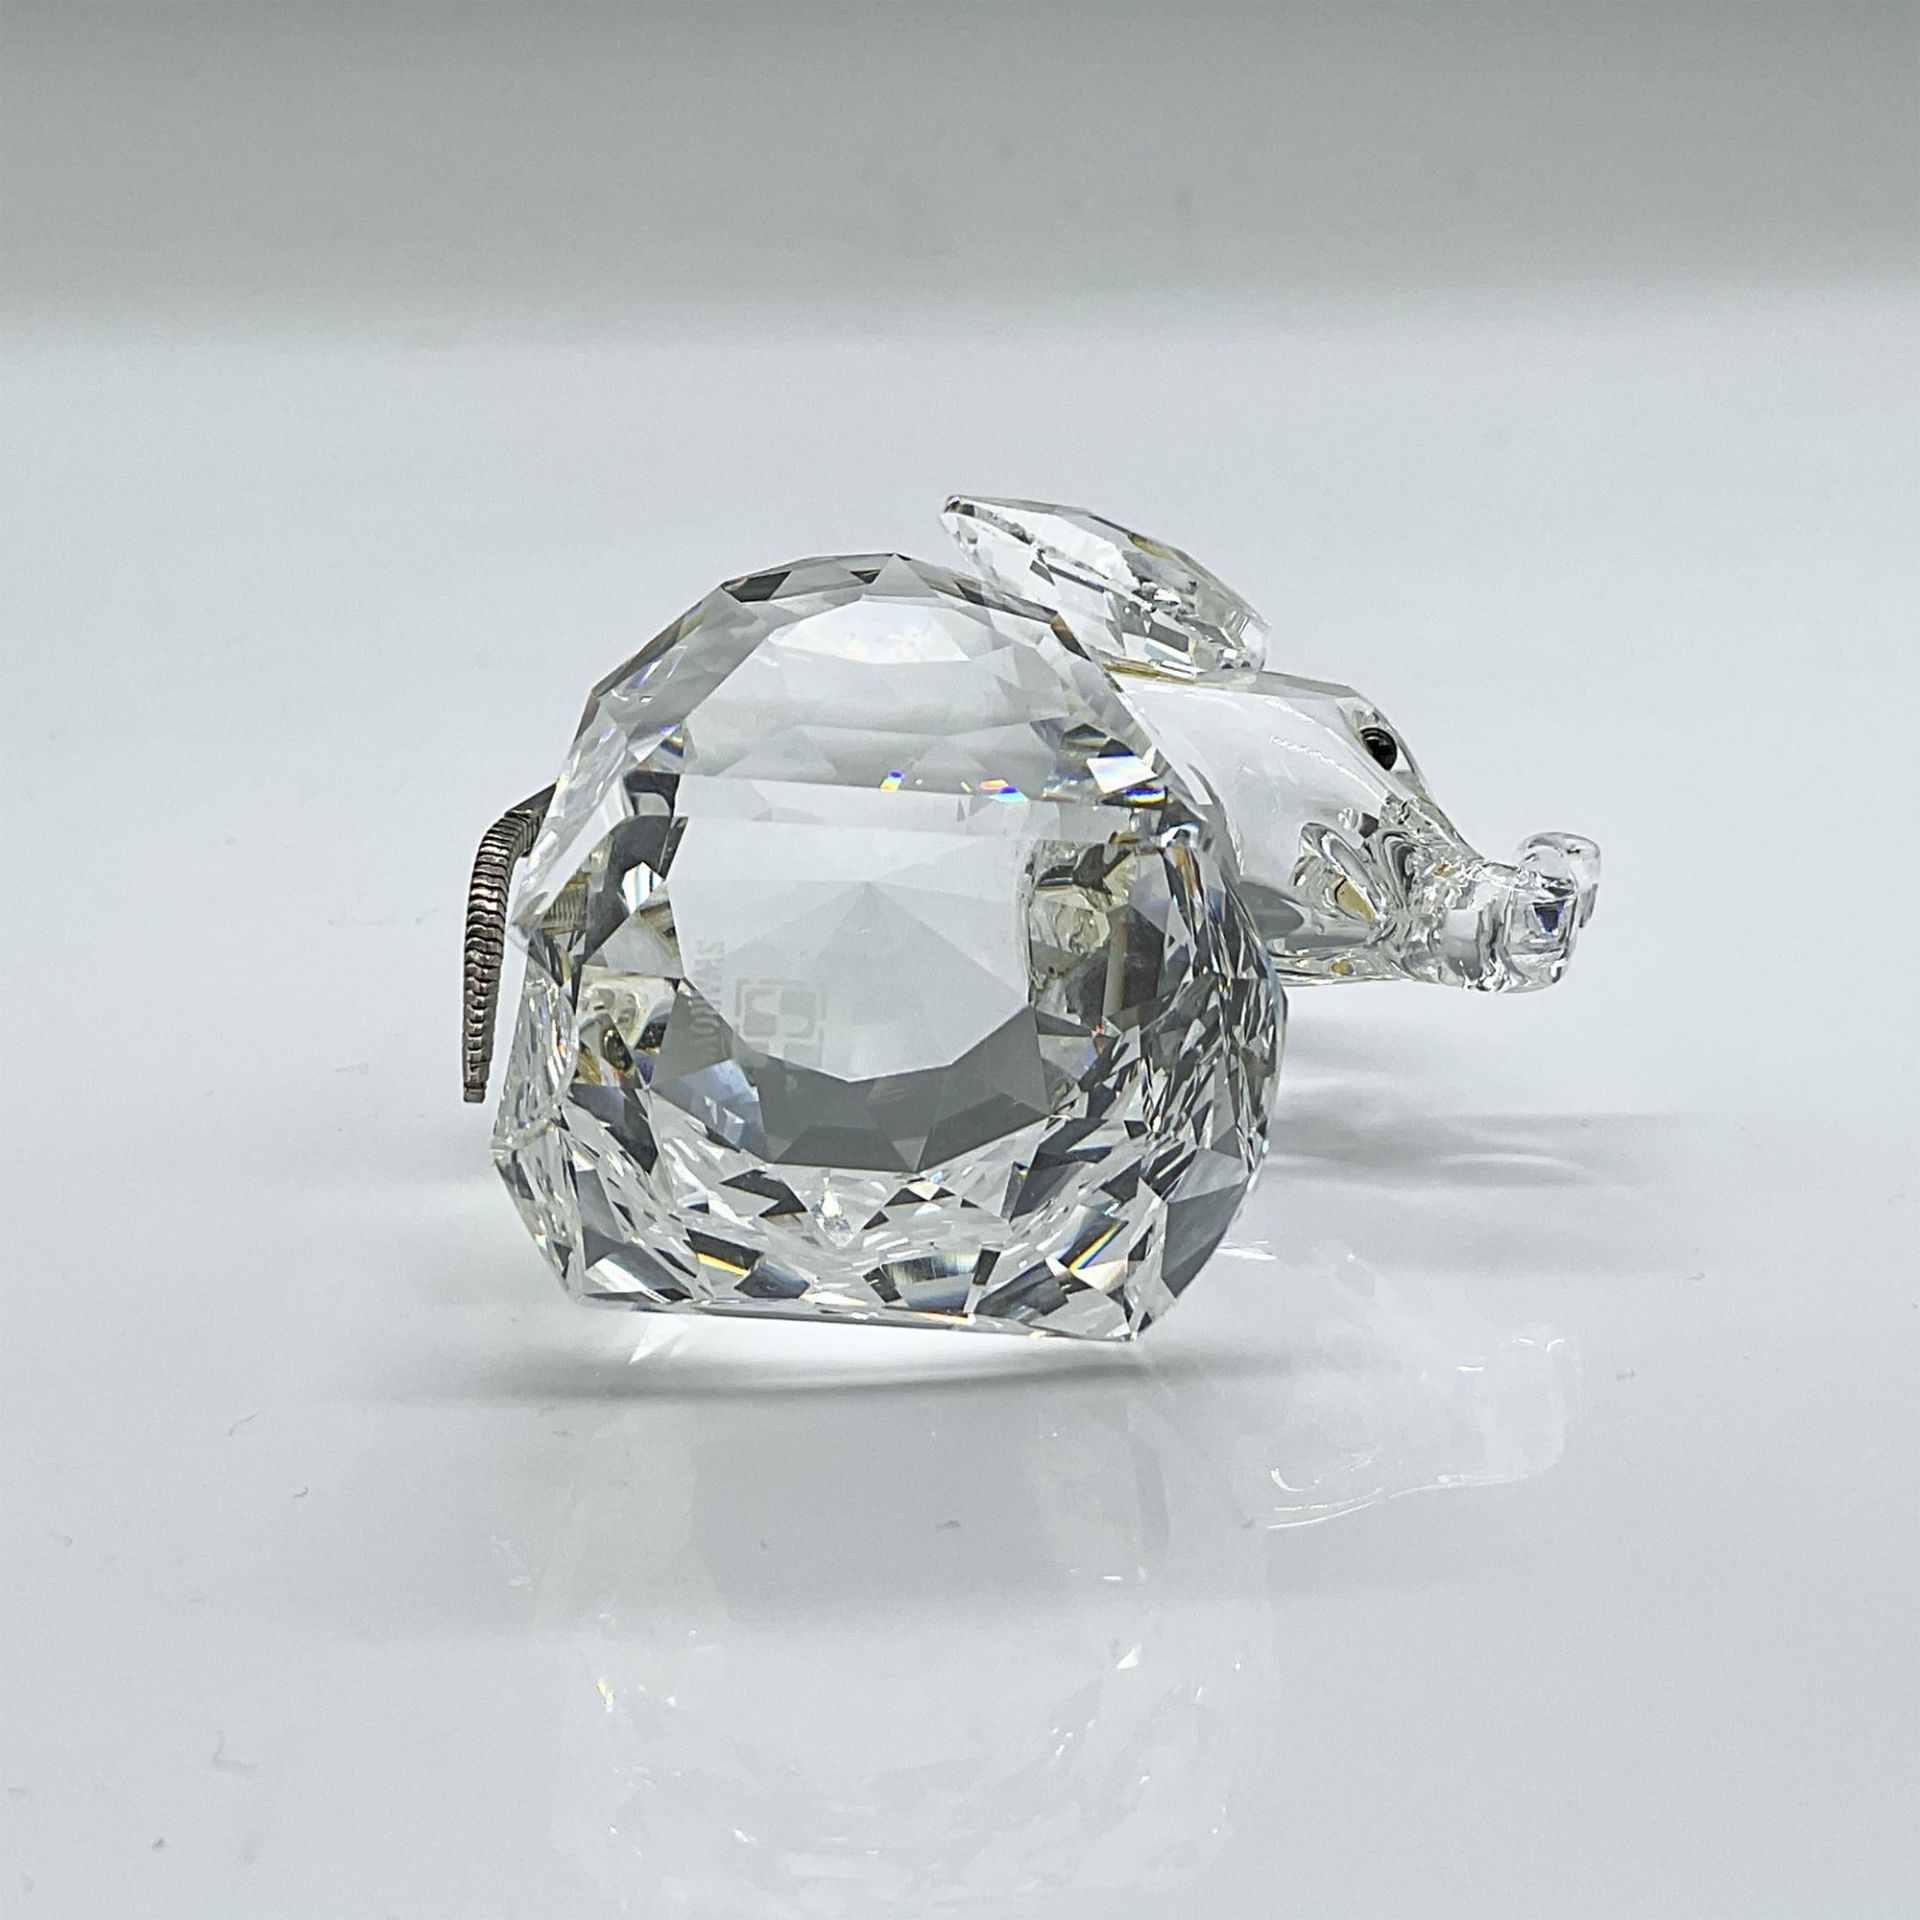 Swarovski Crystal Figurine, Elephant - Image 4 of 4